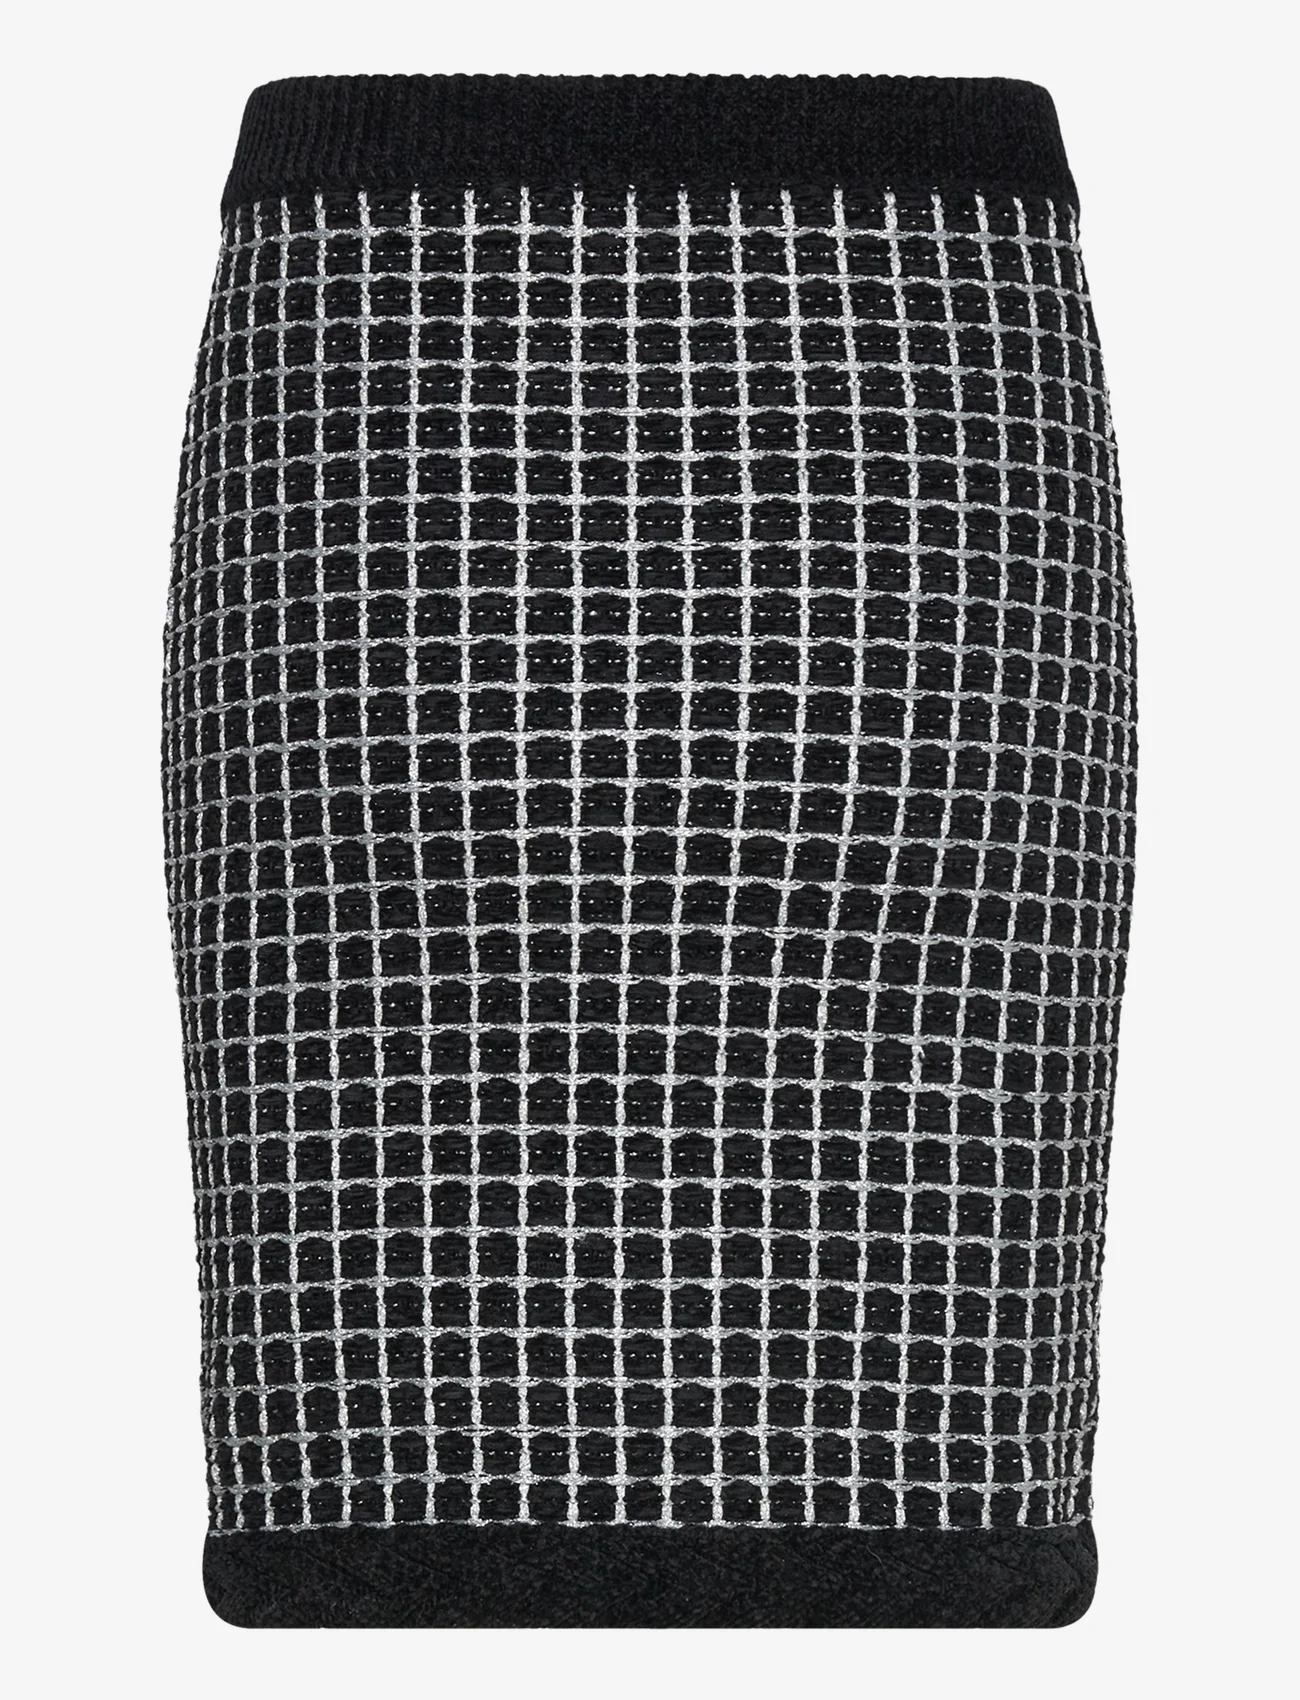 Karl Lagerfeld - boucle knit skirt - megzti sijonai - black/silver - 1